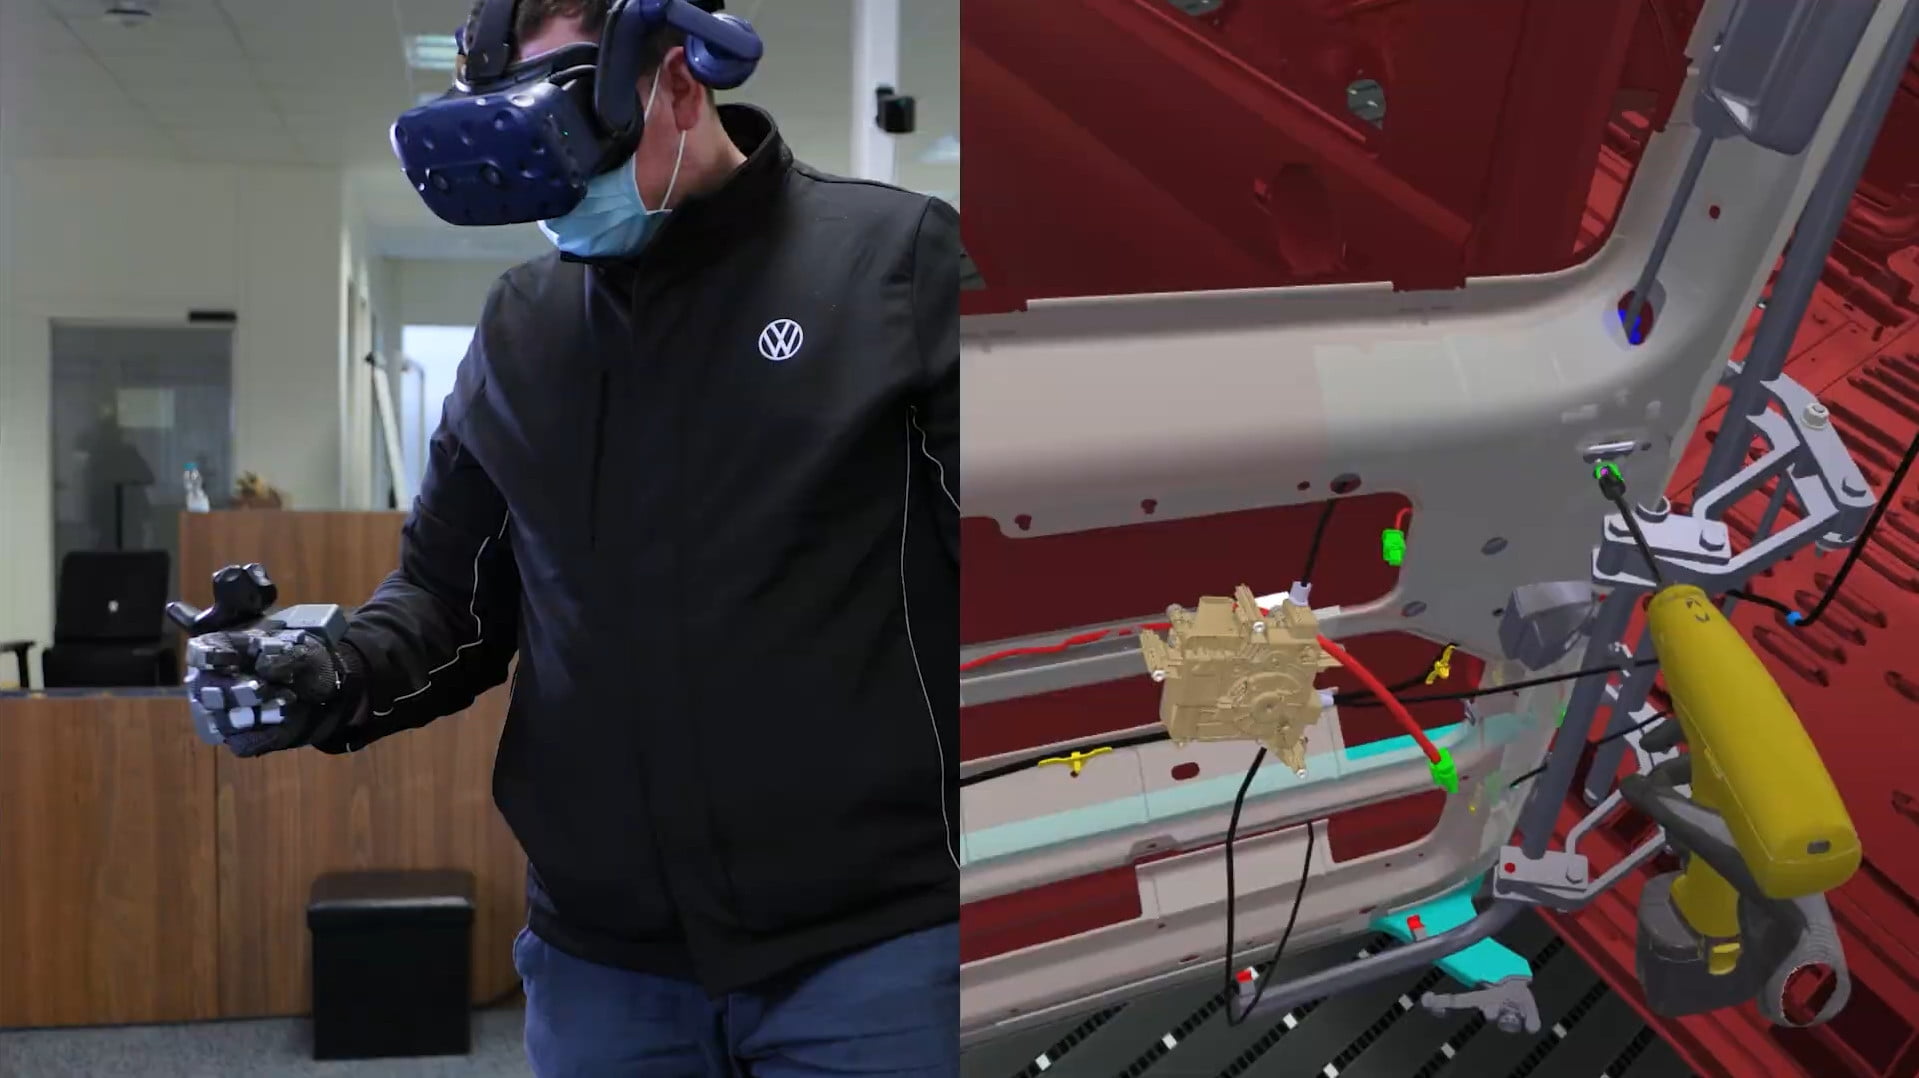 The senseglove Nova haptic glove is used for VW training in VR.